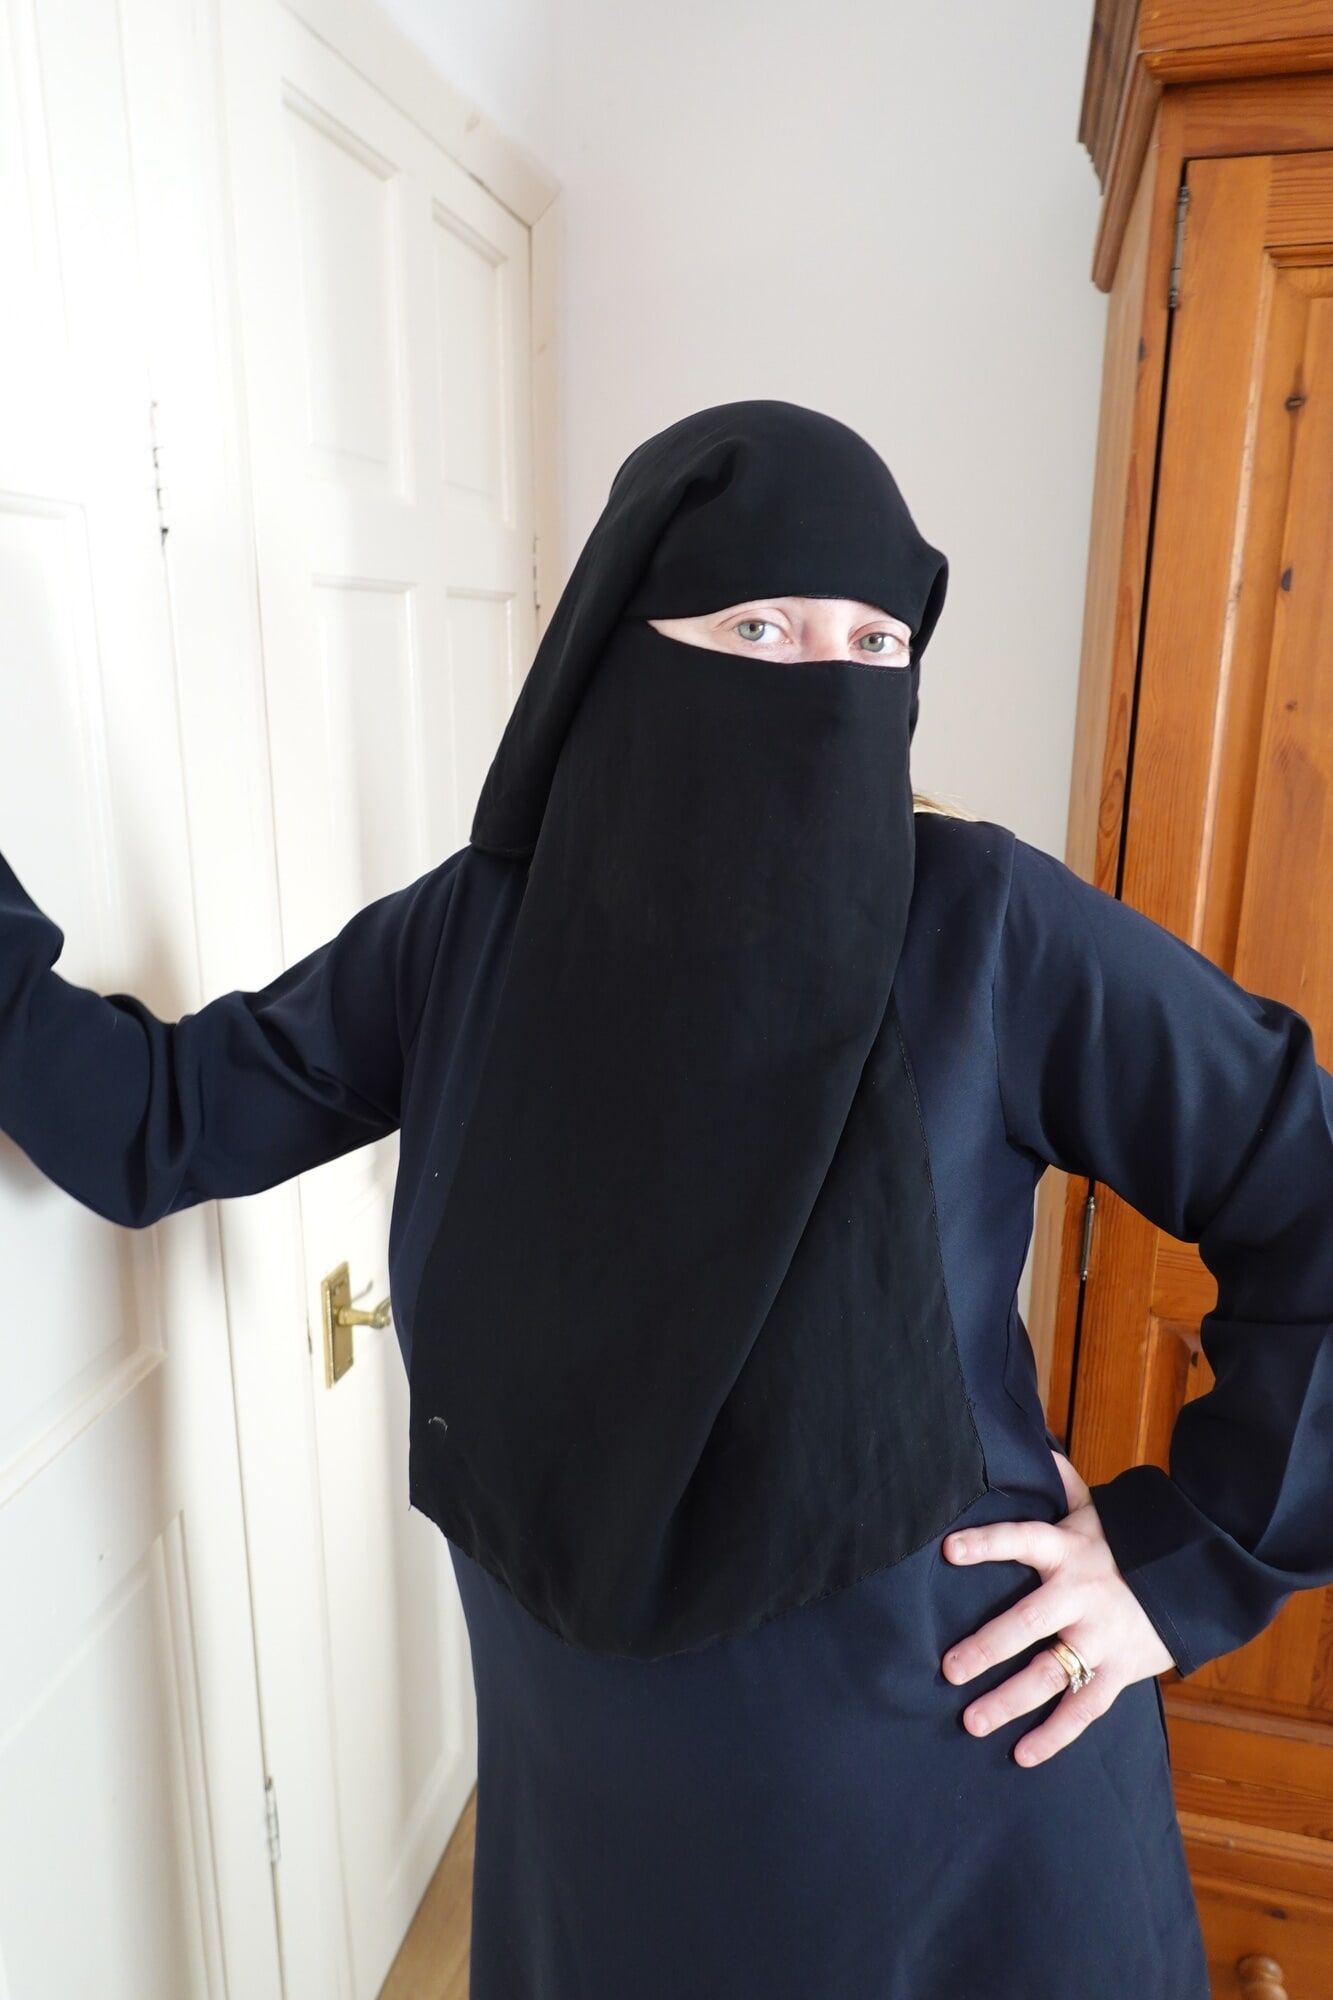 Pale Skin MILF in Burqa and Niqab and High heels #12